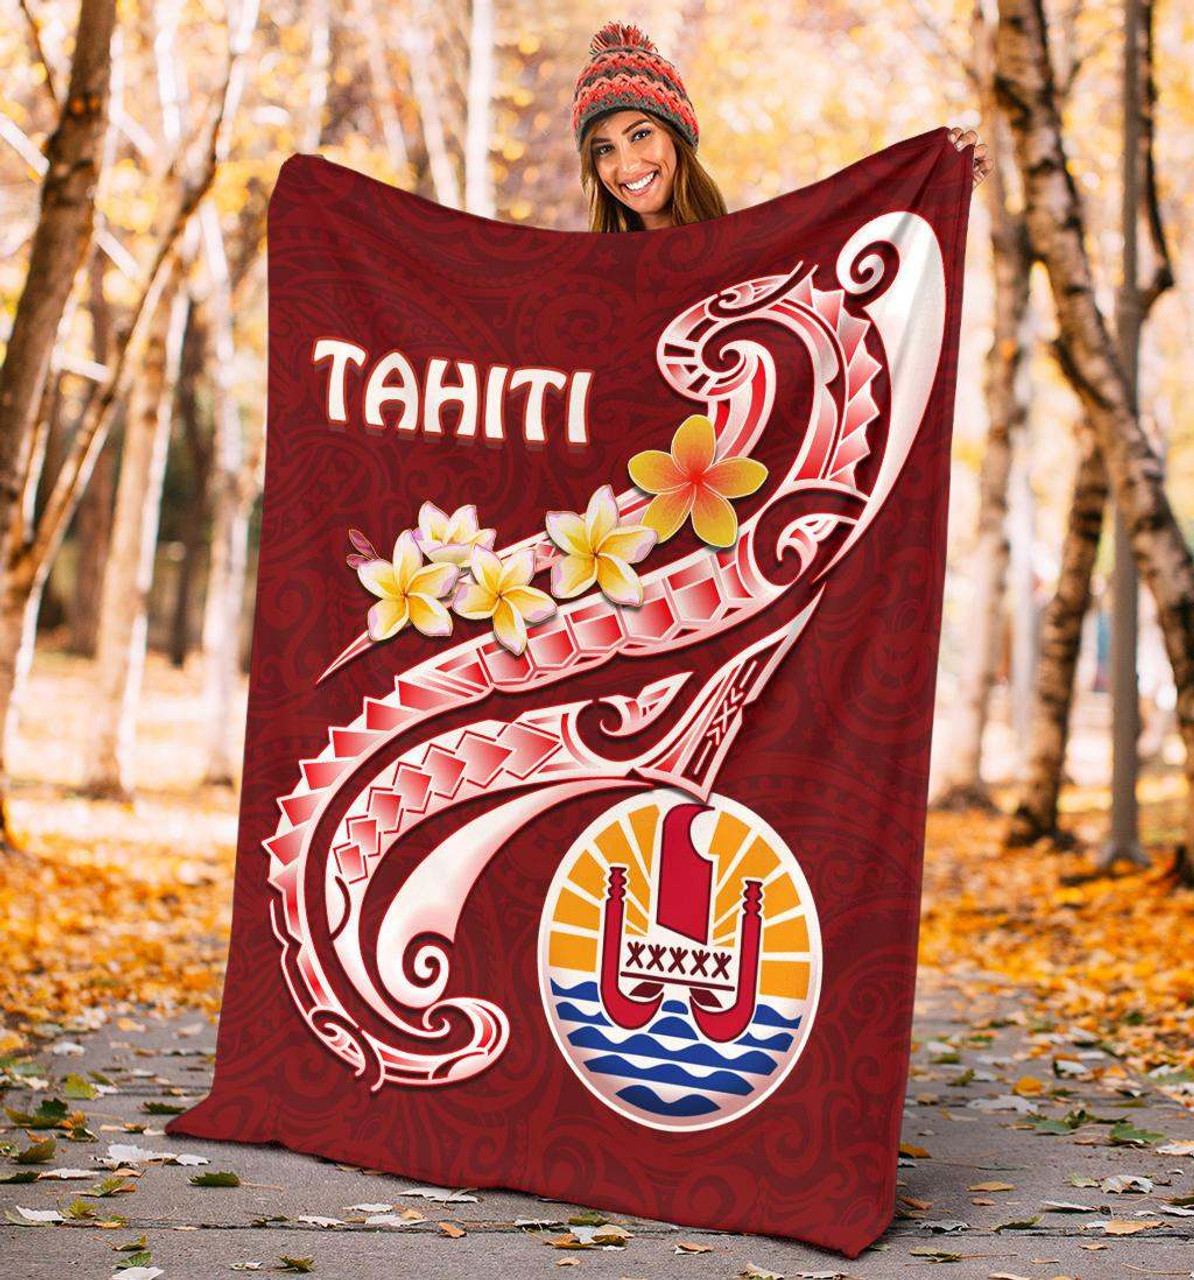 Tahiti Premium Blanket - Tahiti Seal Polynesian Patterns Plumeria 4